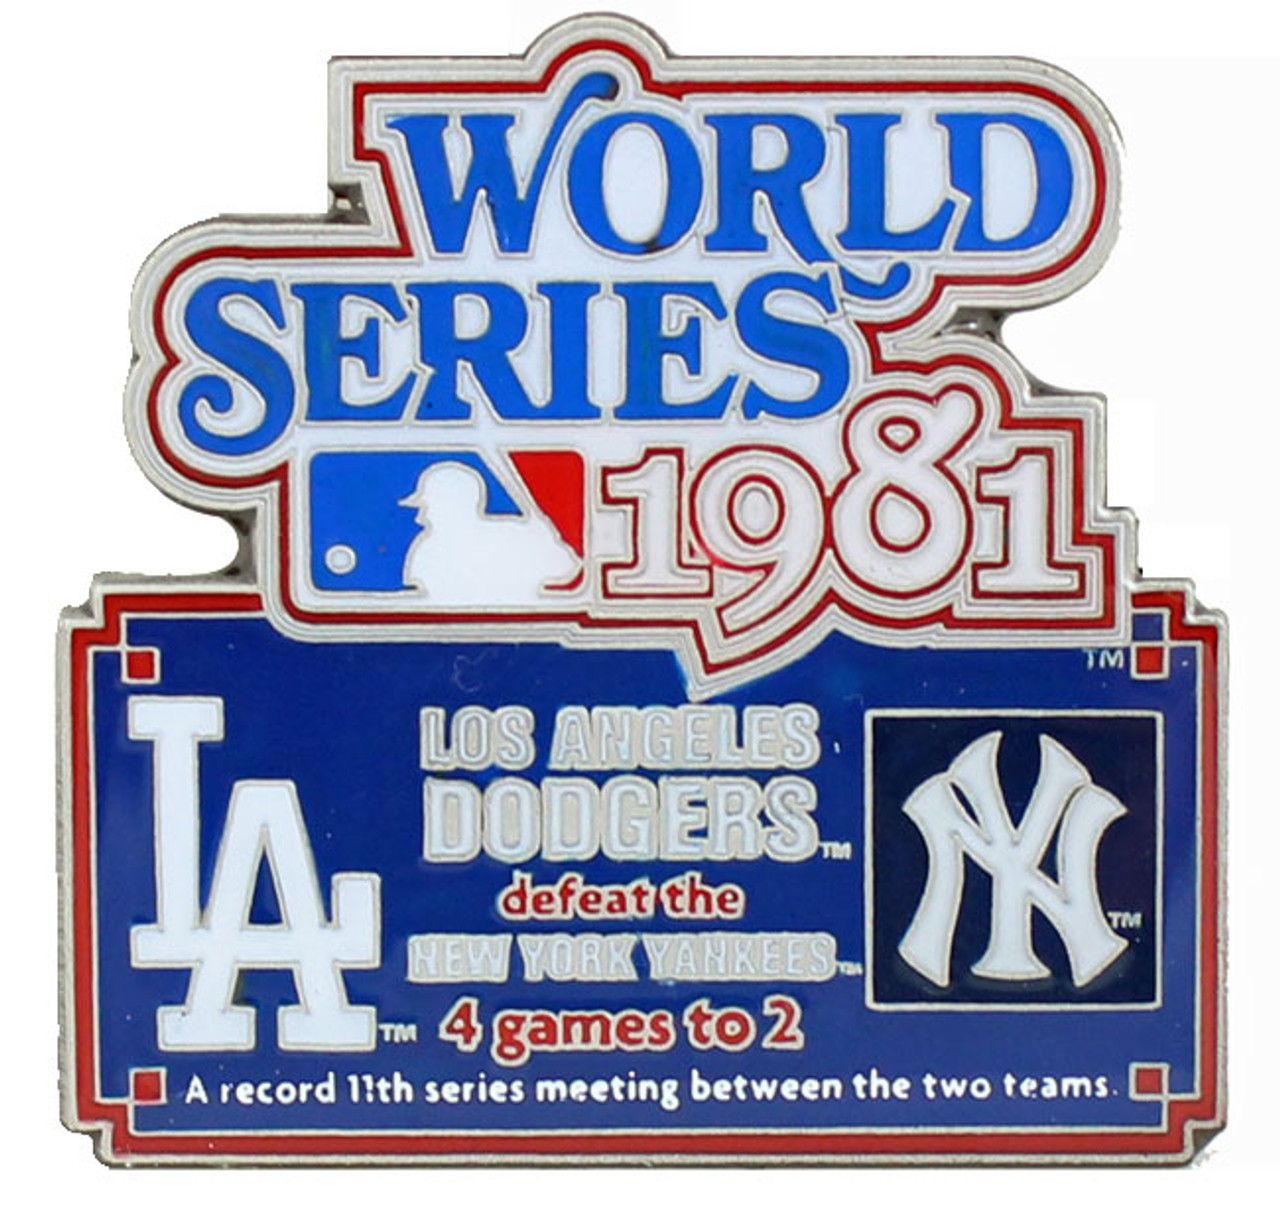 1981 World Series Commemorative Pin - Dodgers vs. Yankees